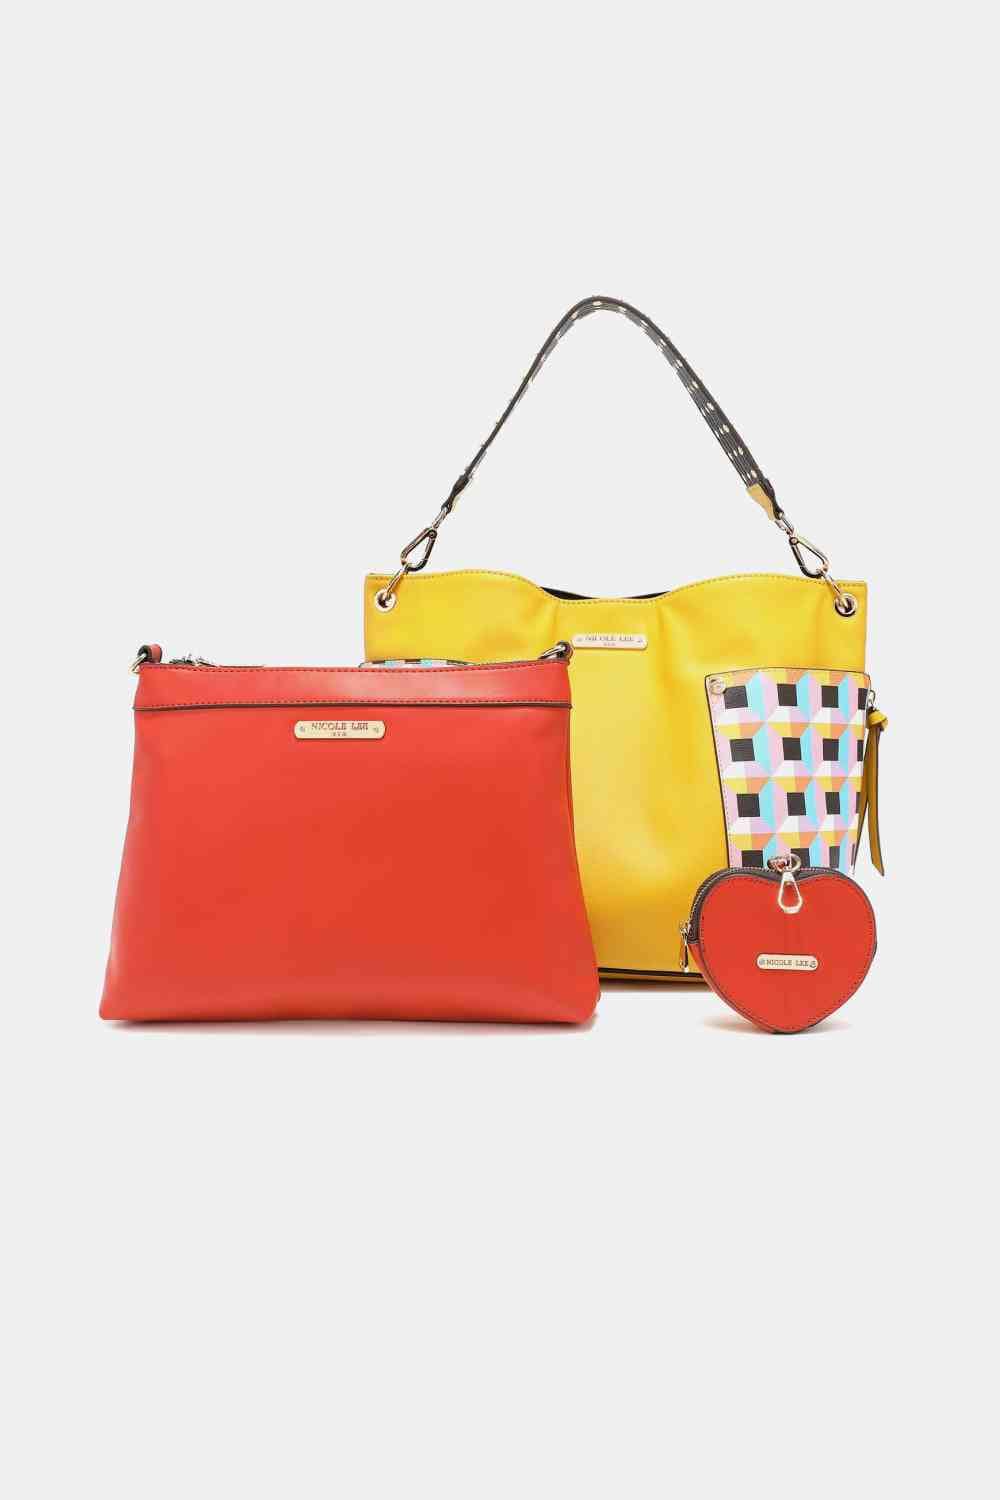 Nicole Lee USA Quihn 3-Piece Handbag Set Mustard / One Size